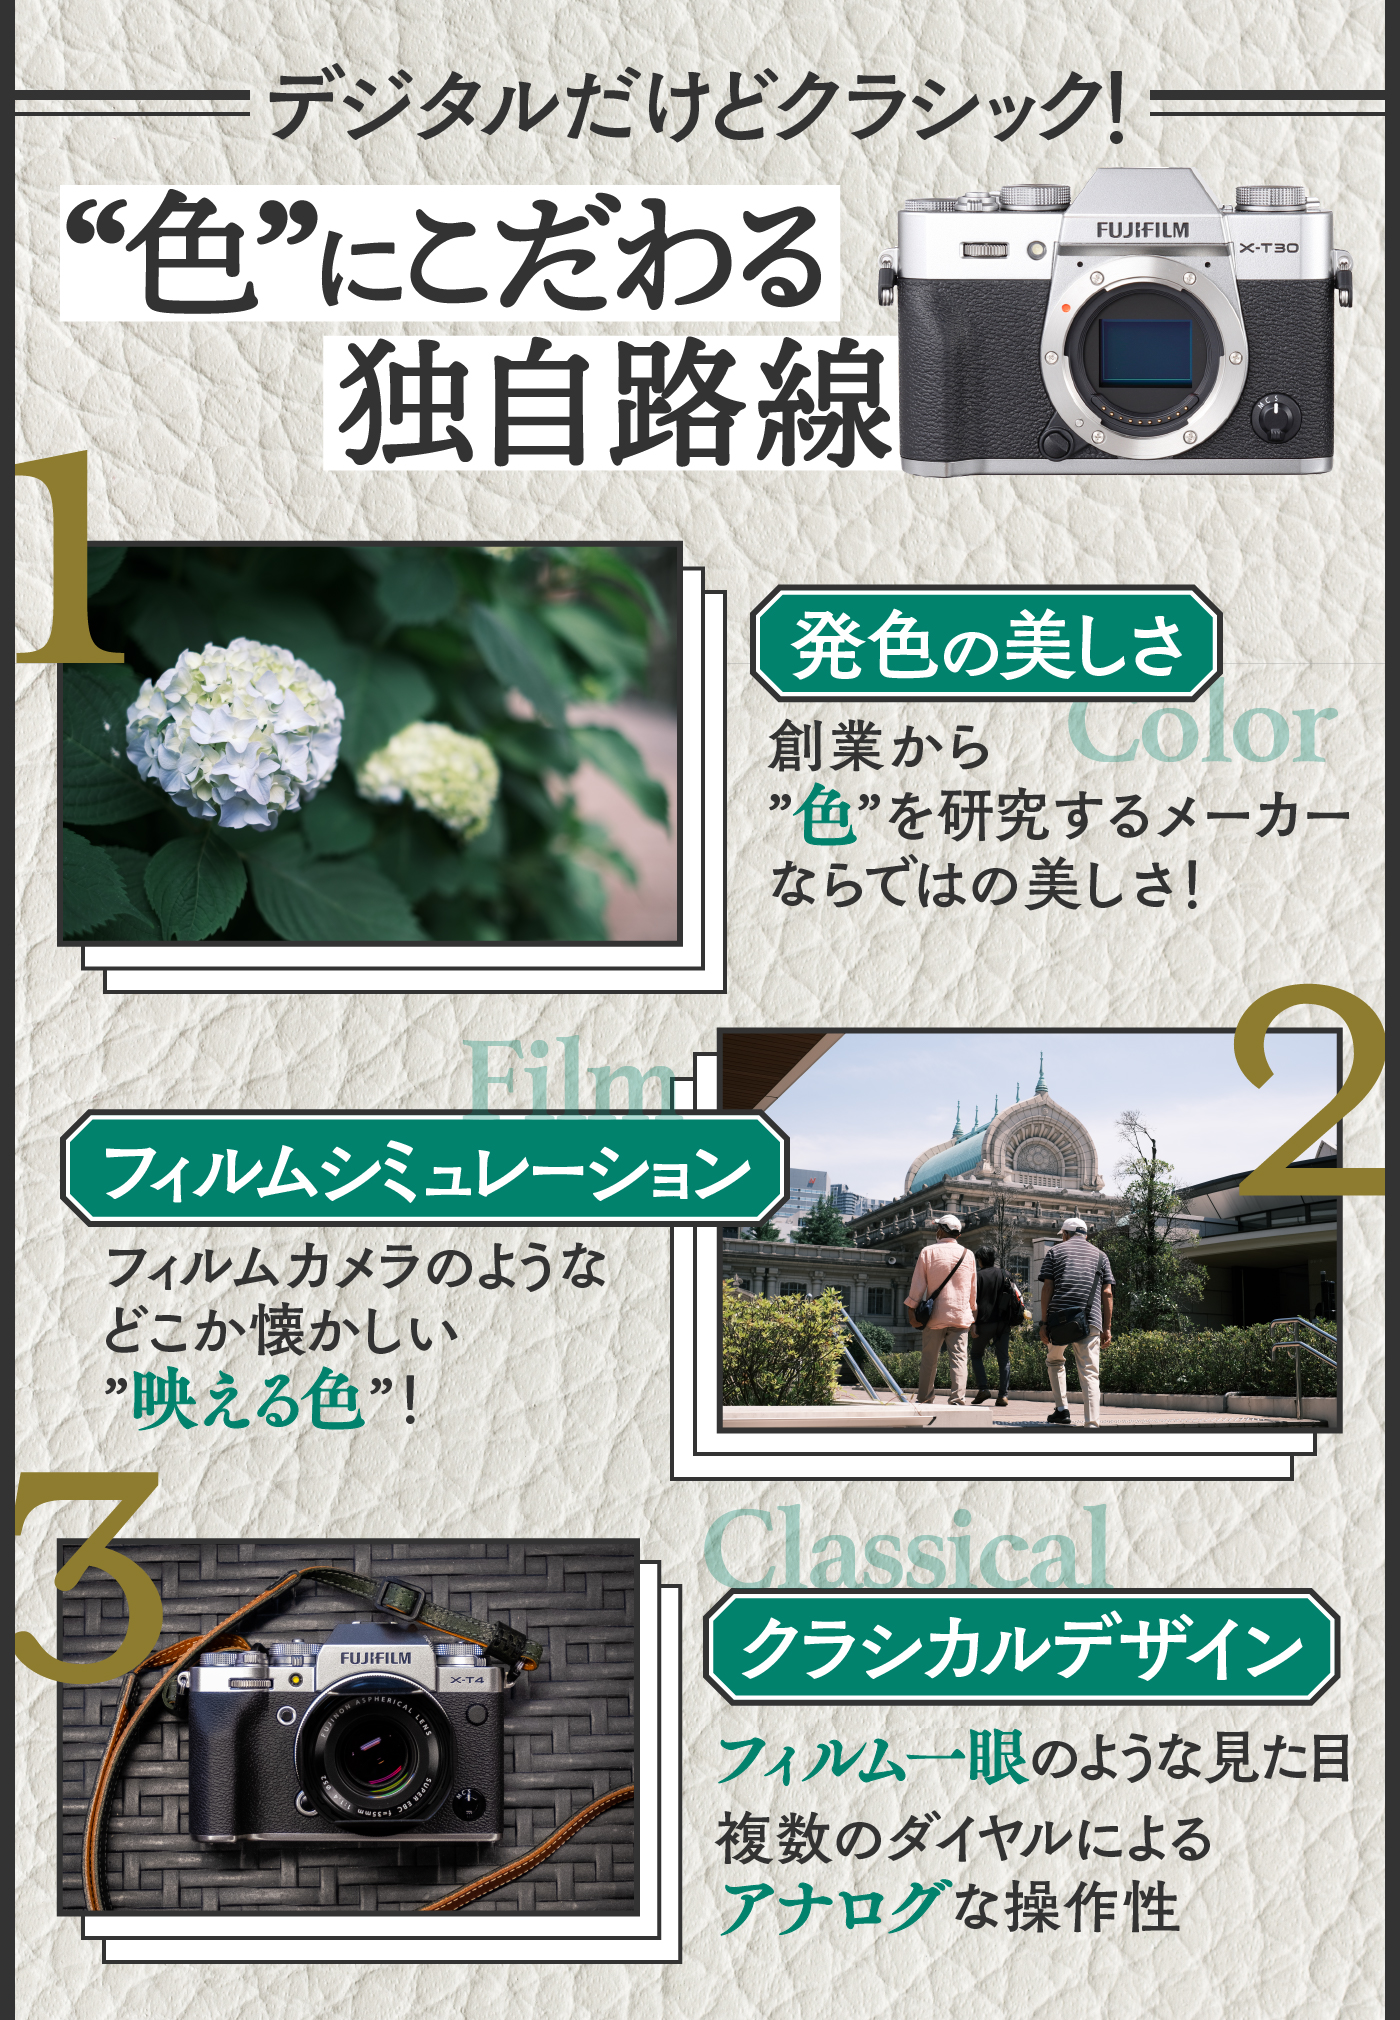 Fujifilm 富士フイルム X100F Silver (販売店保証書付) - デジタルカメラ